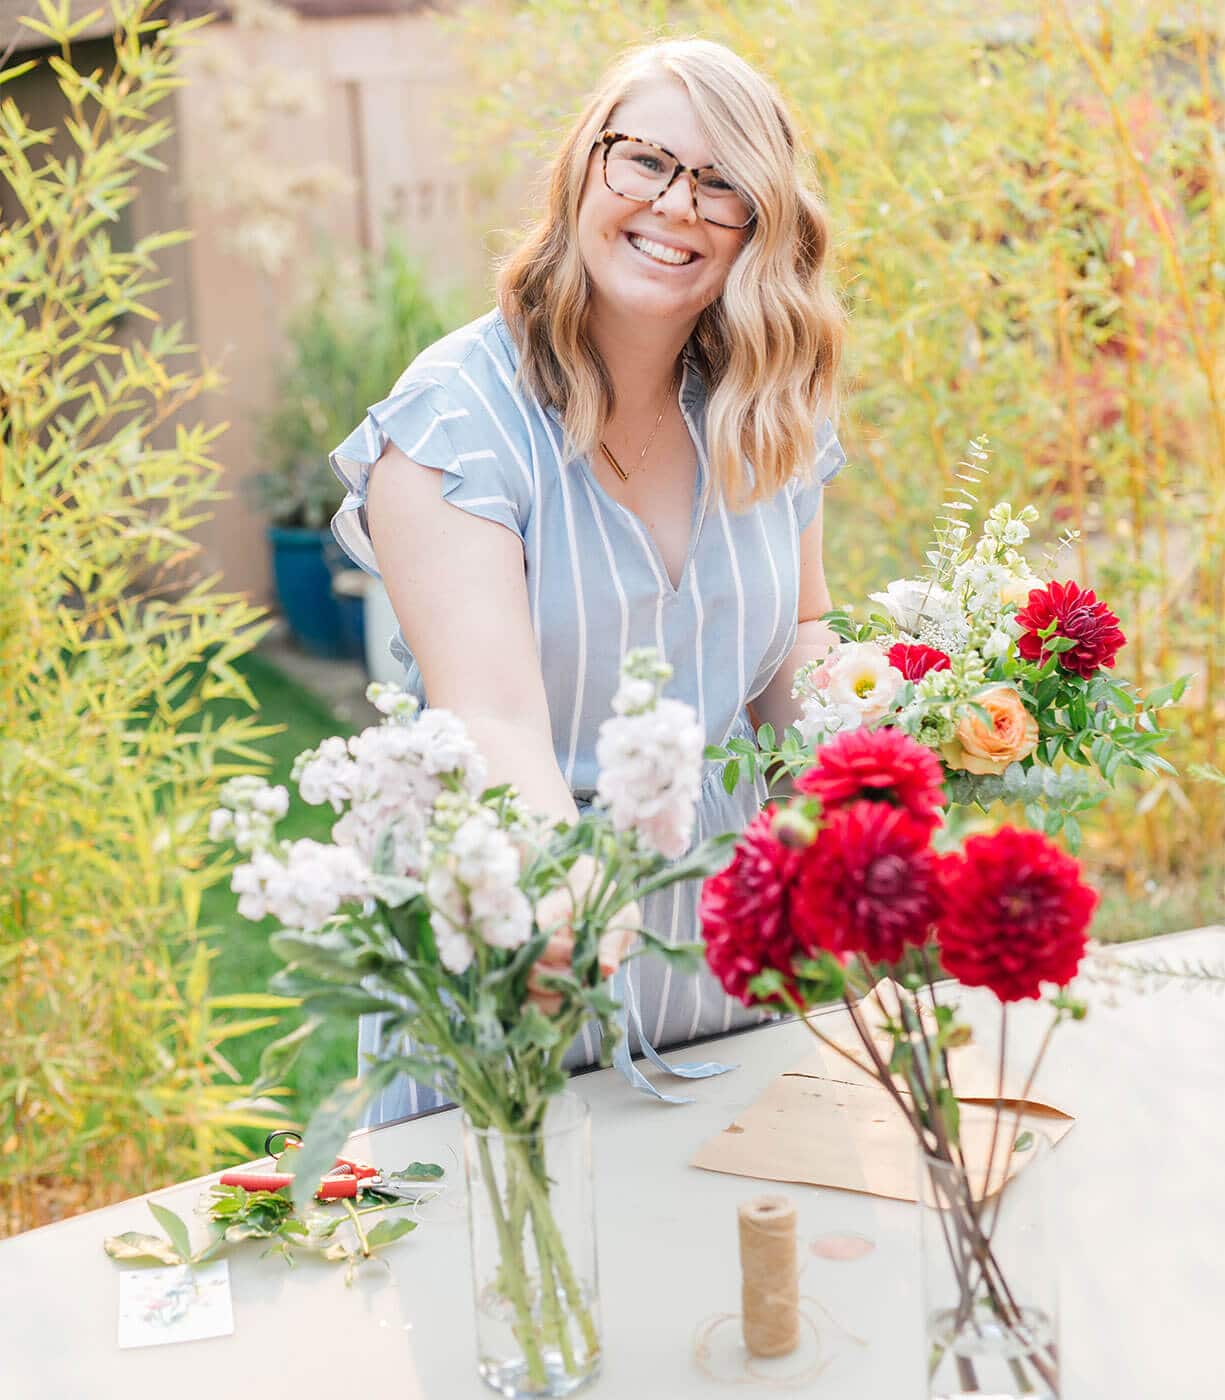 Amanda Kitaura of Bloom arranging flowers